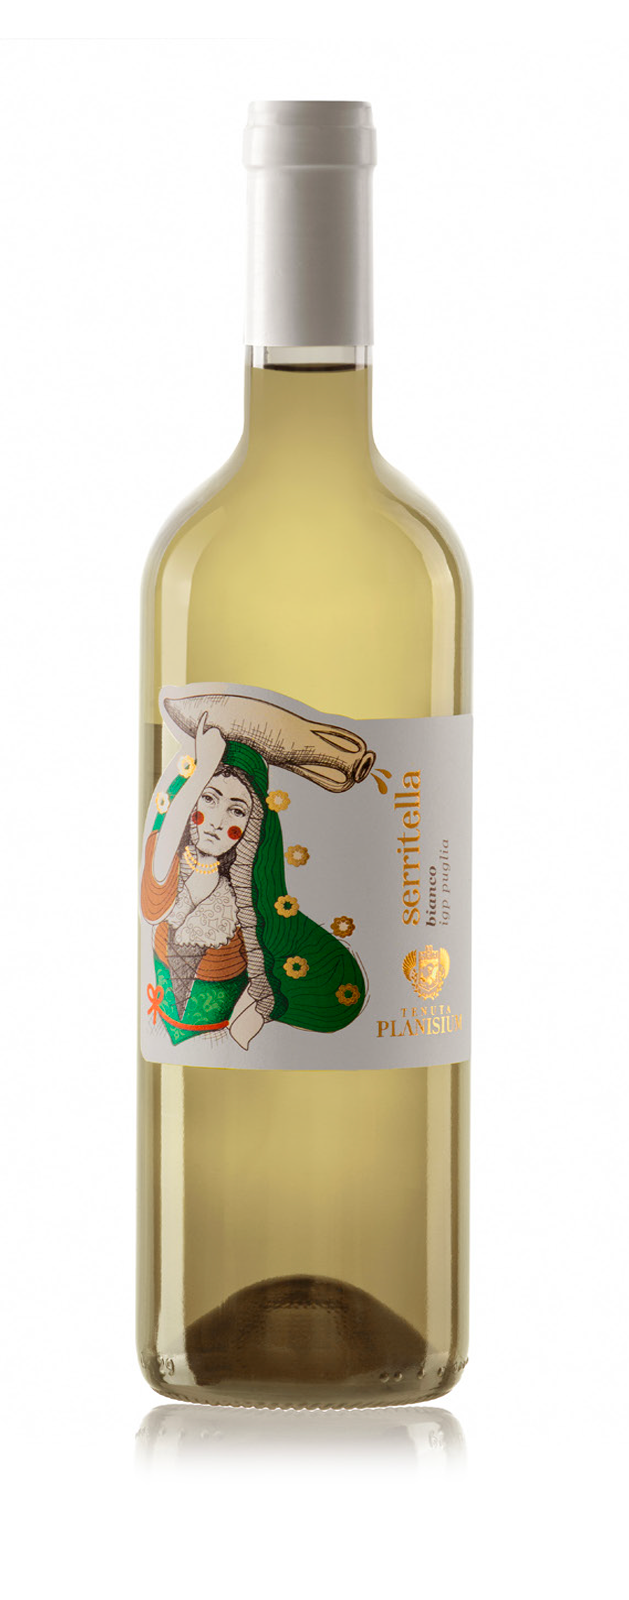 Serritella White Wine from Uve Fiano Tenuta Planisium